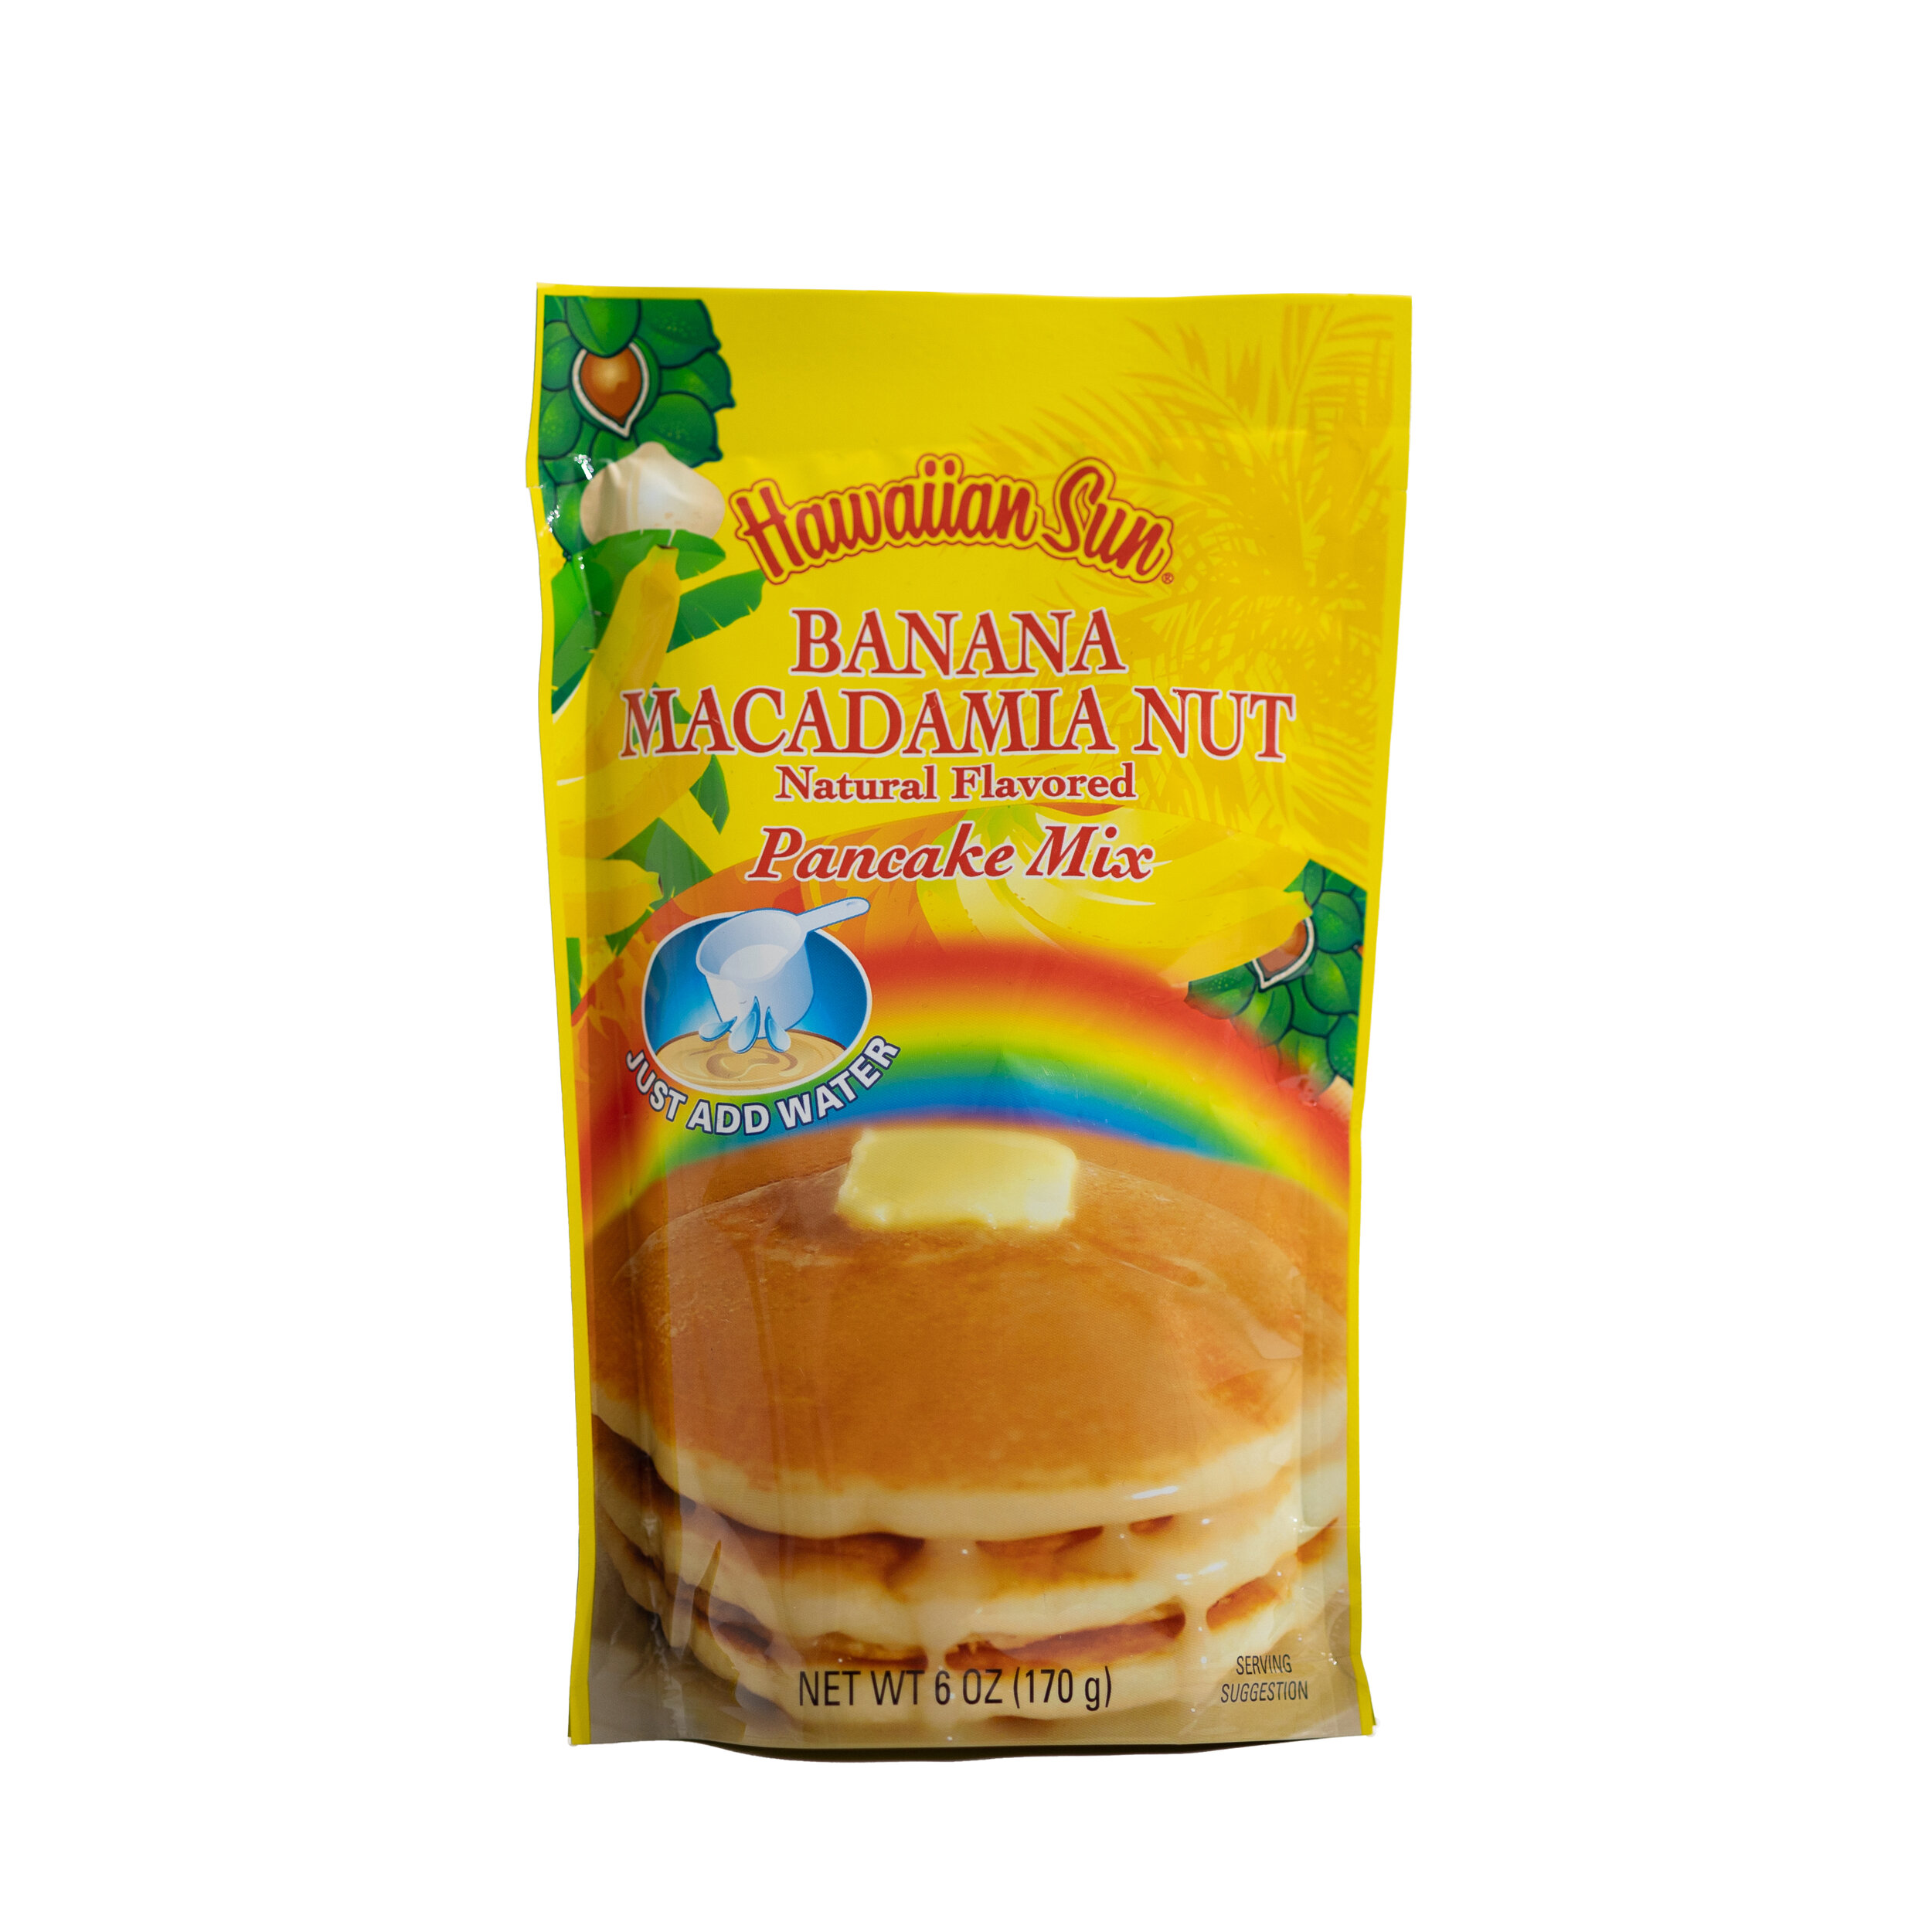 Macadamia Nut Flavored Pancake Mix